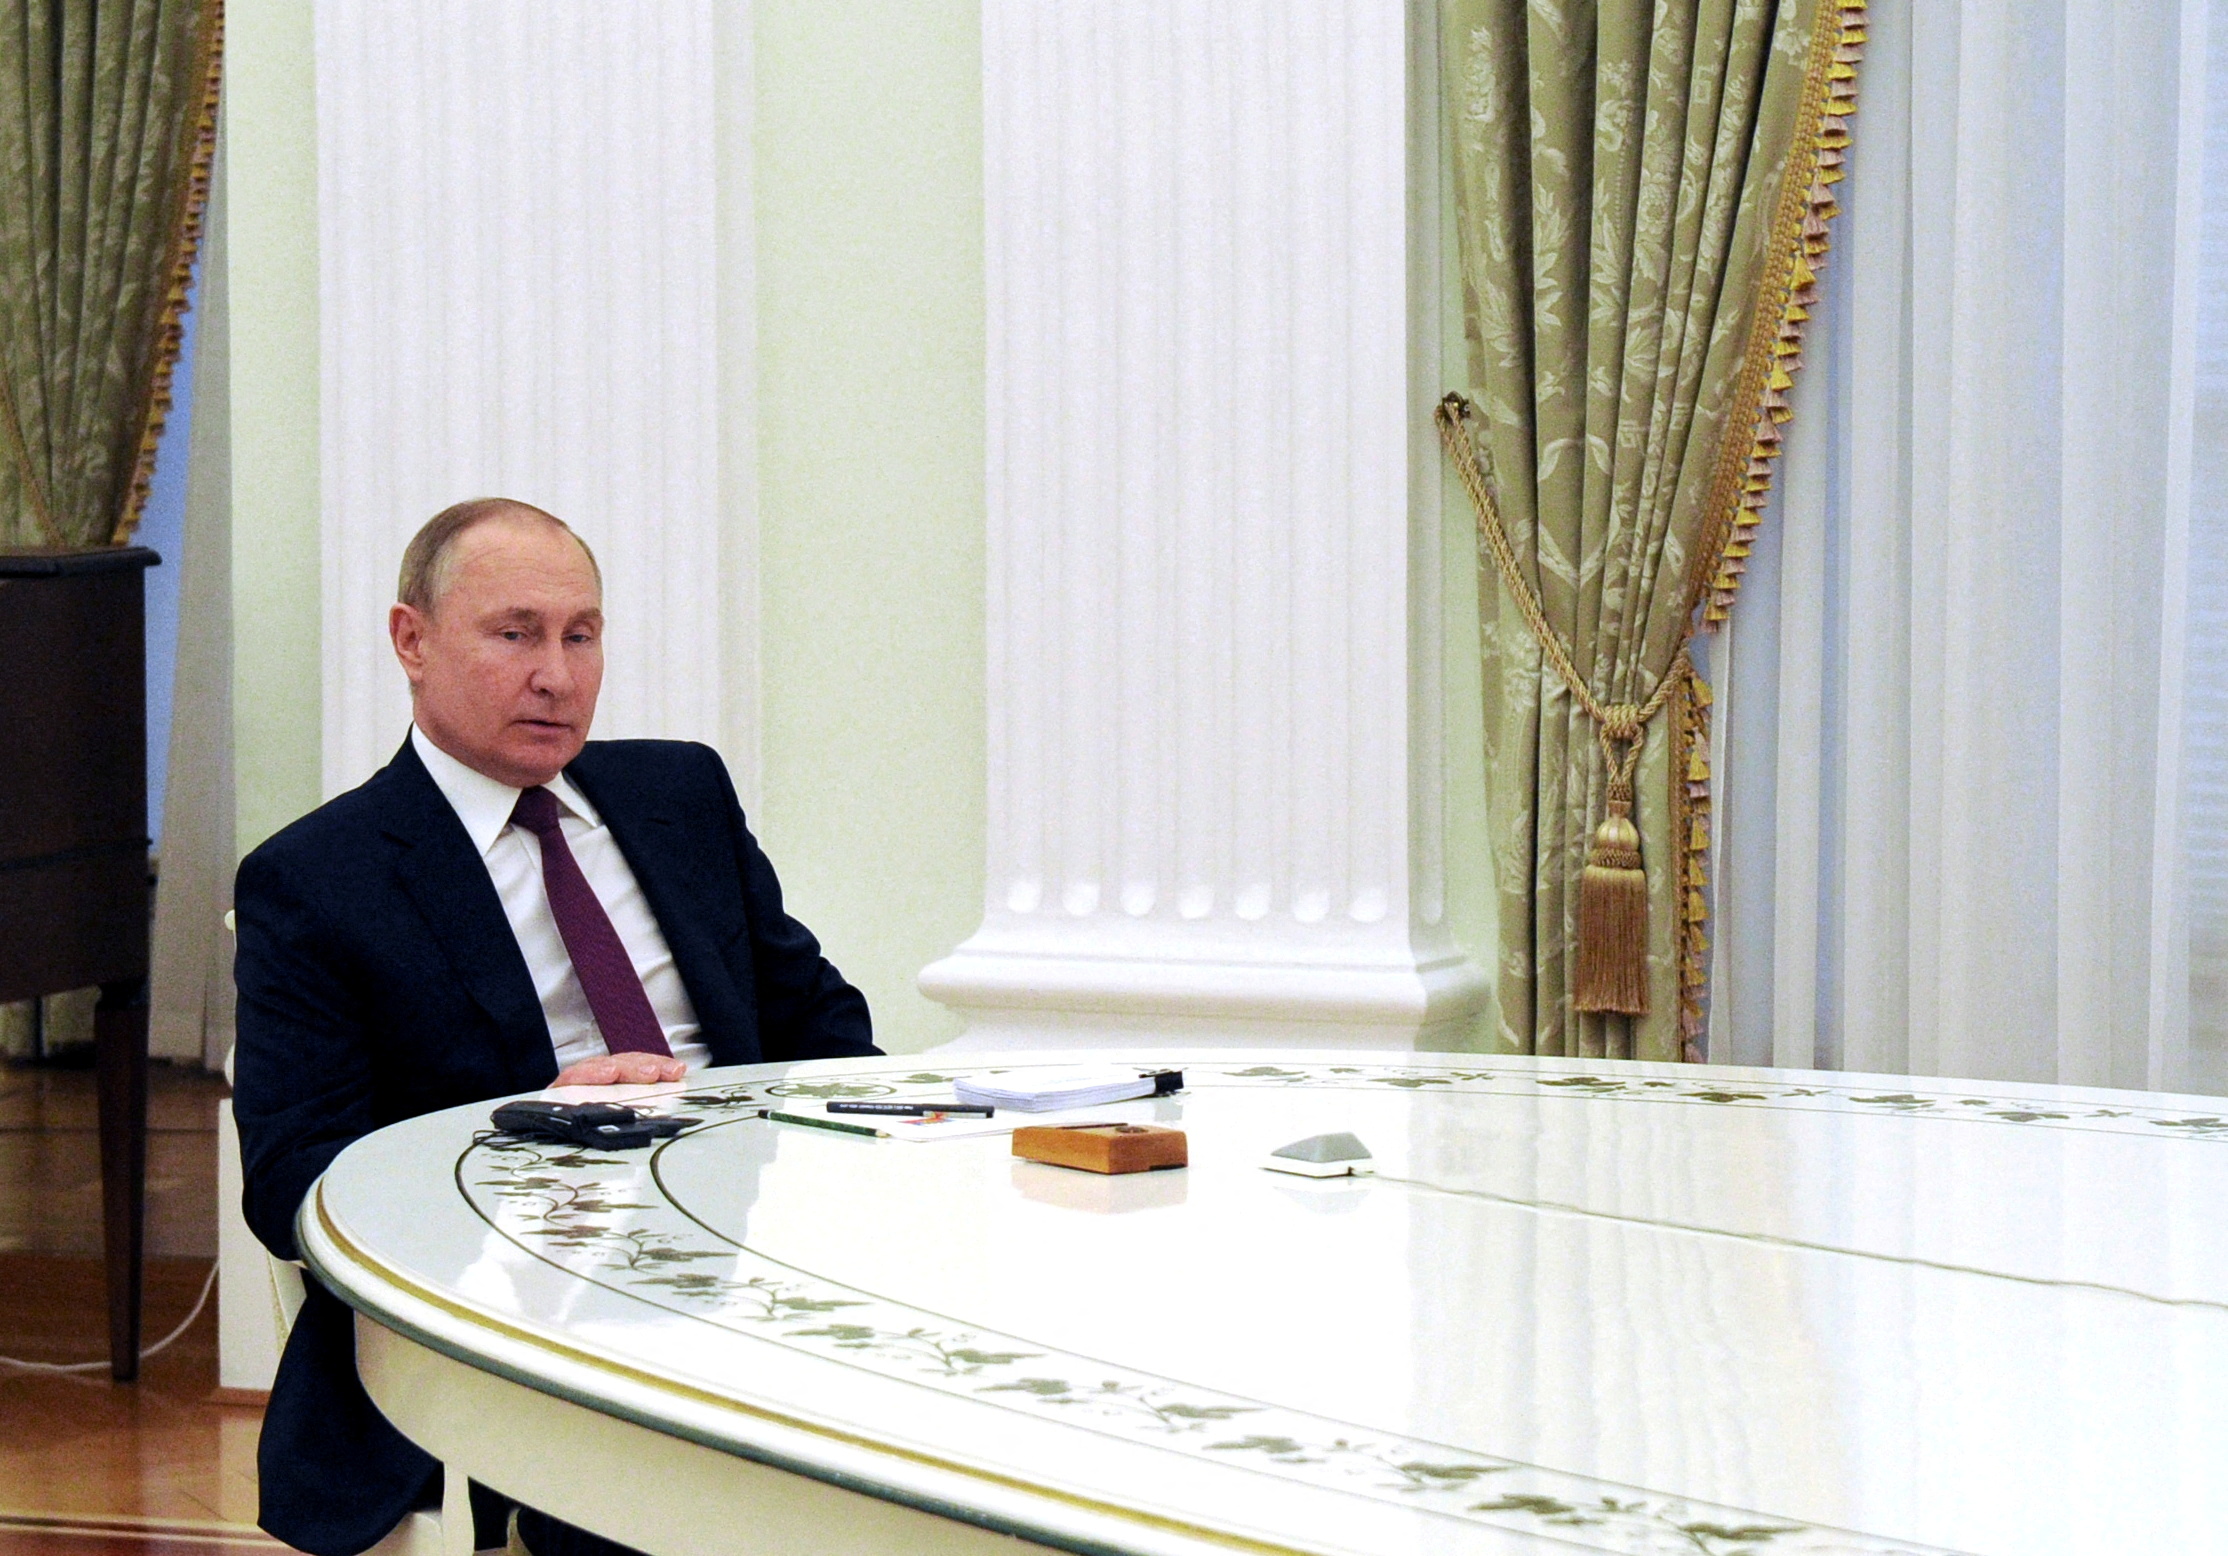 Putin suele sentarse en grandes meses a metros de distancia de su interlocutor (Sputnik/Mikhail Klimentyev/Kremlin via REUTERS)